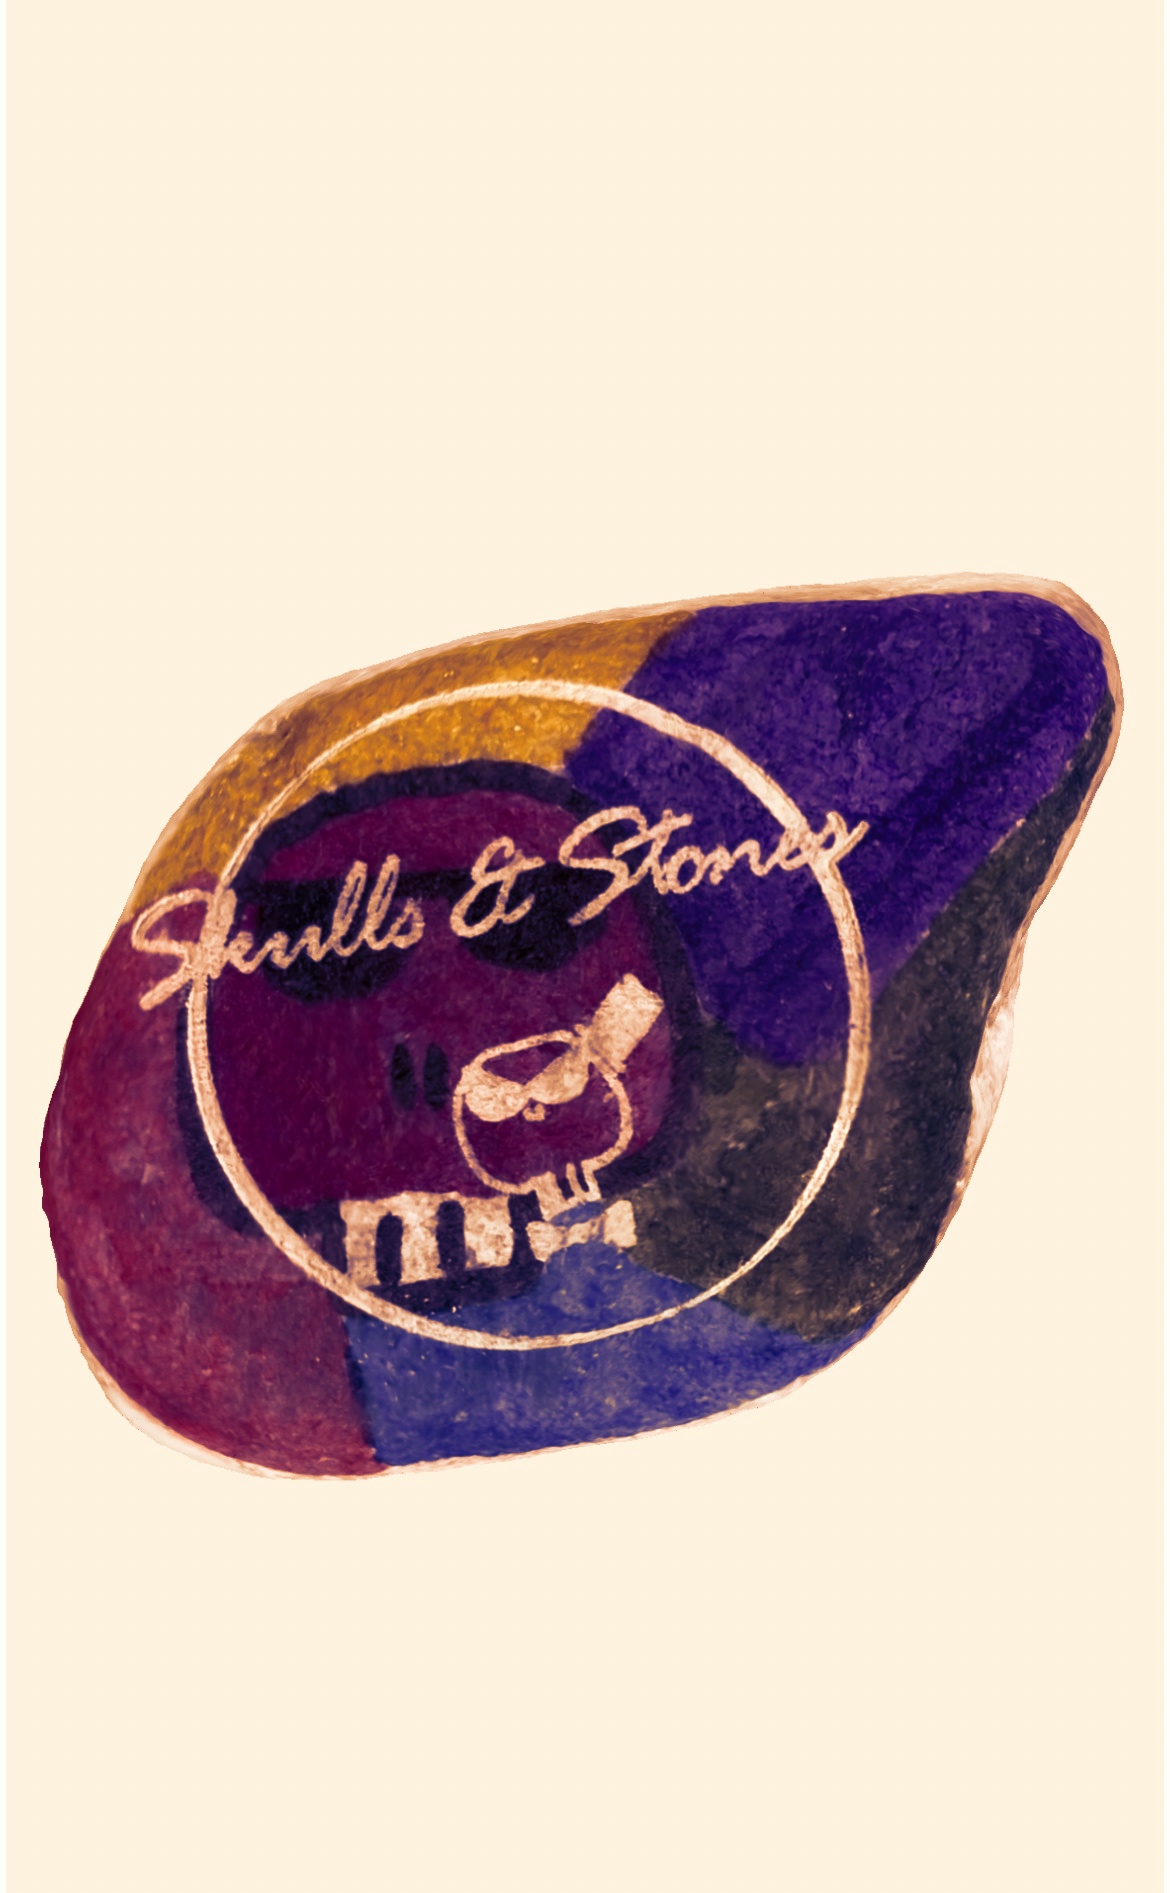 Skulls_and_stones